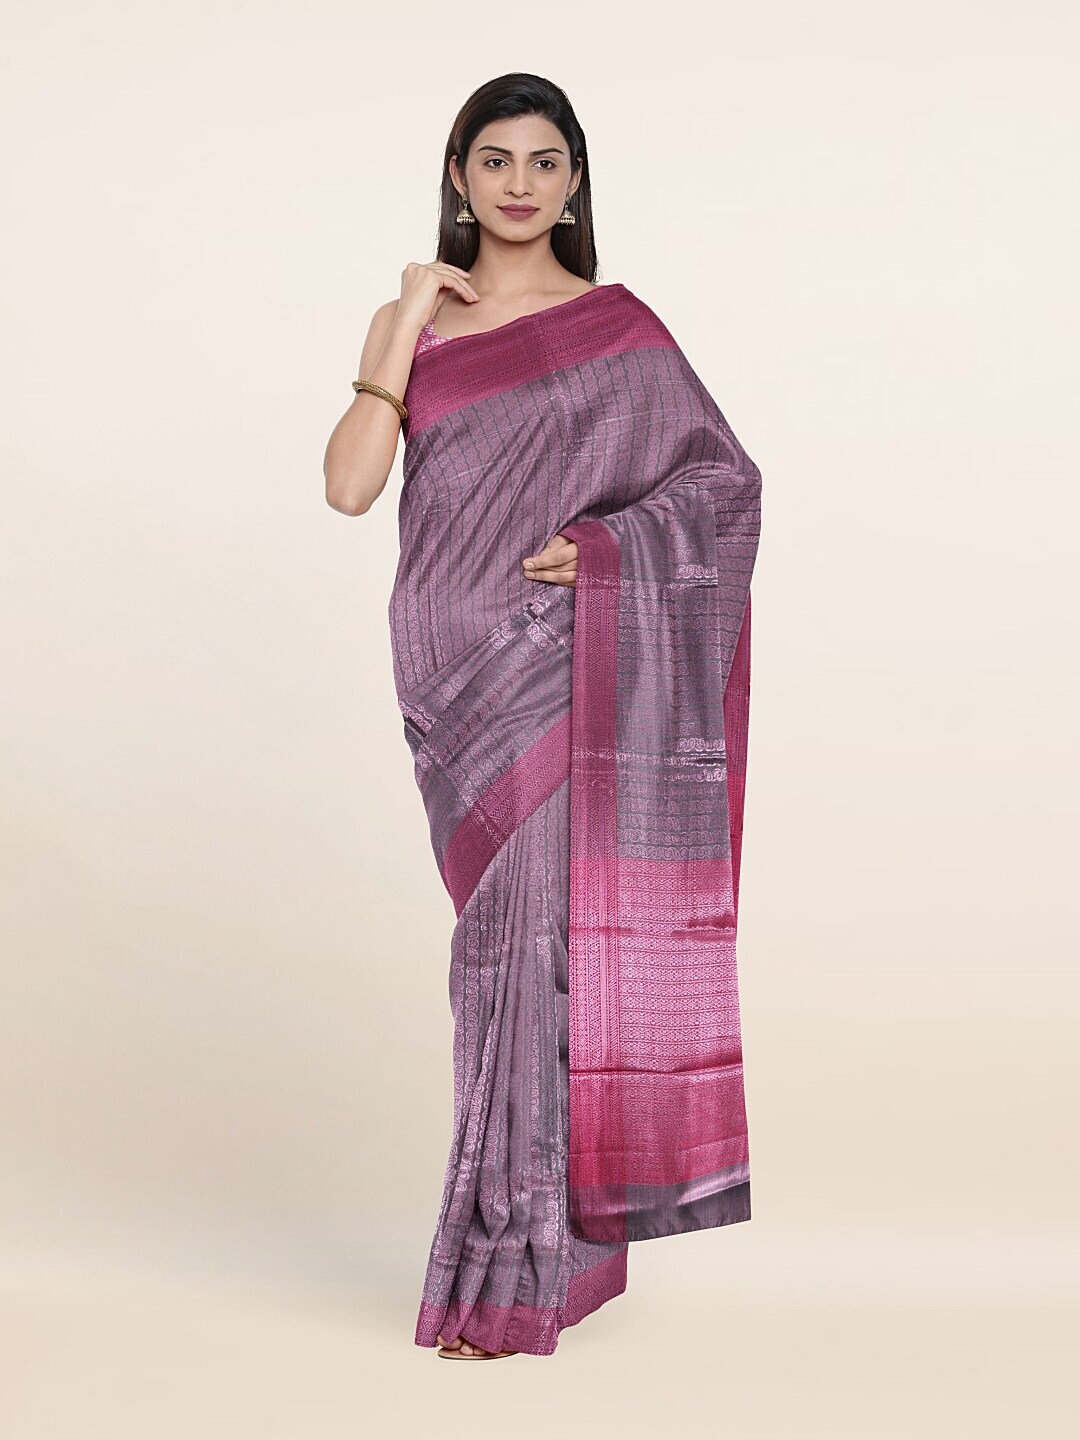 Pothys Grey & Silver-Toned Woven Design Zari Brocade Saree Price in India